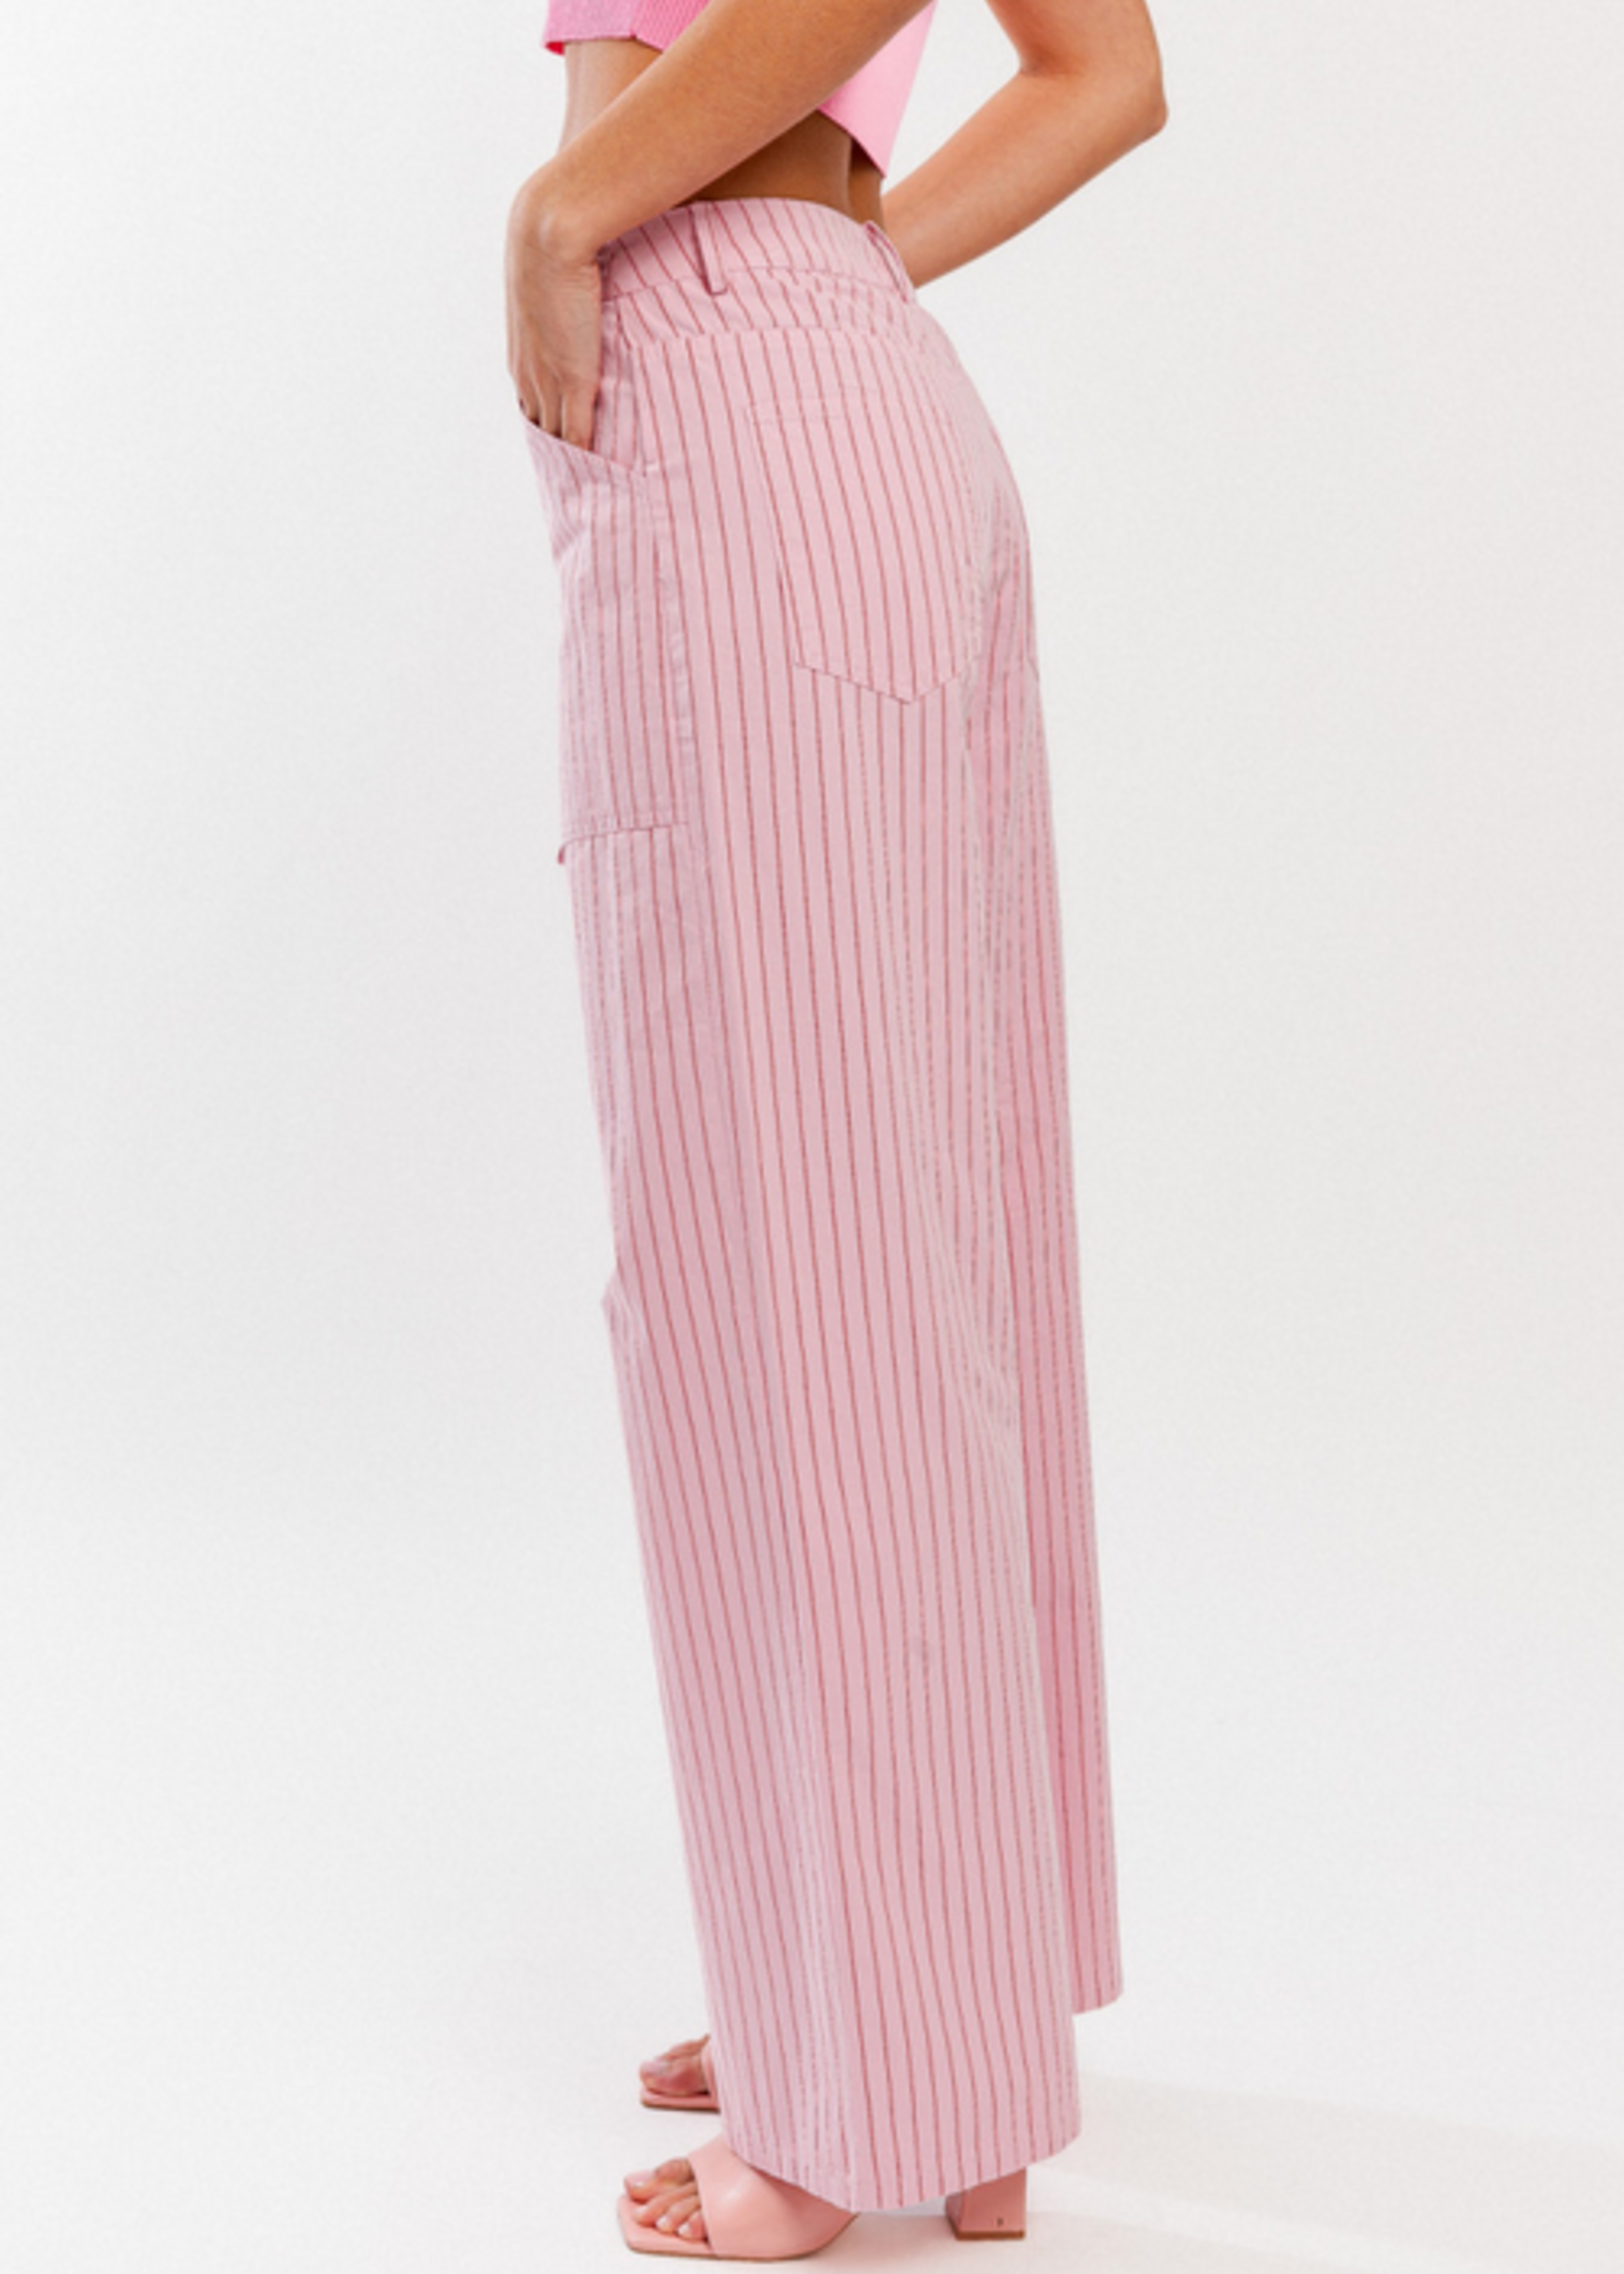 Pink Pin Stripe Pants